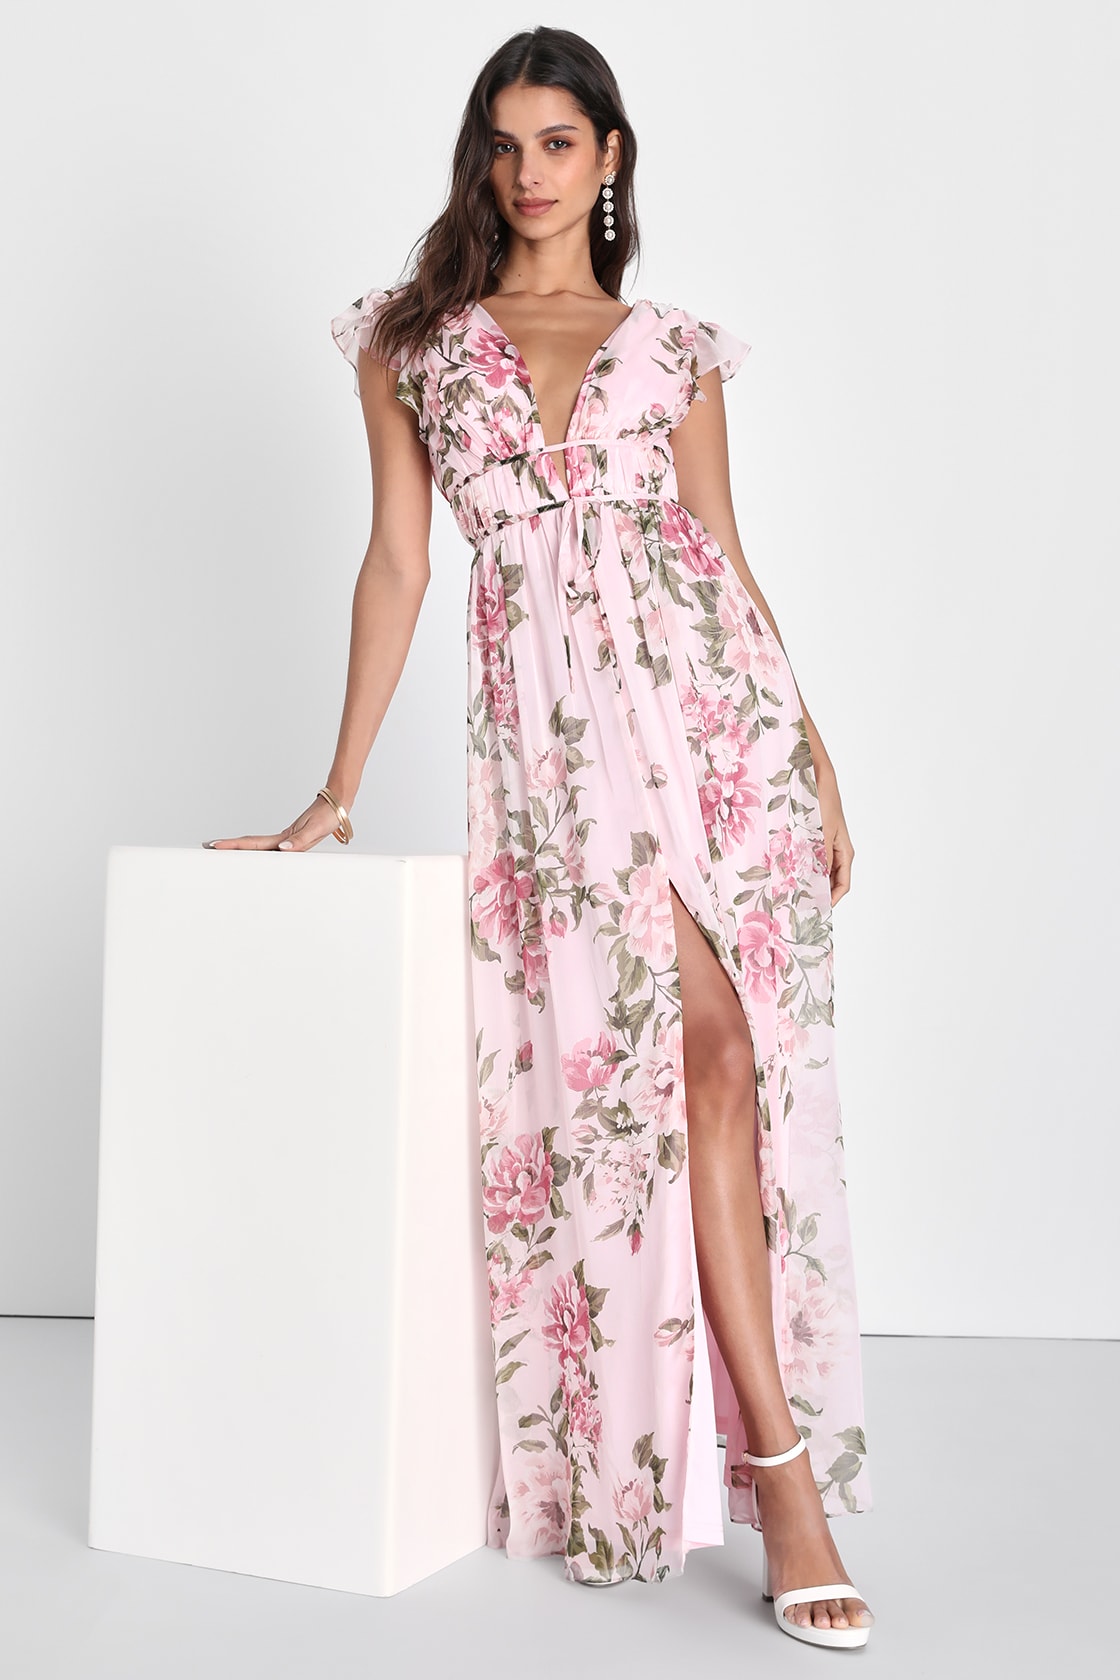 Blooming Impression Pink Floral Print Ruffled Maxi Dress